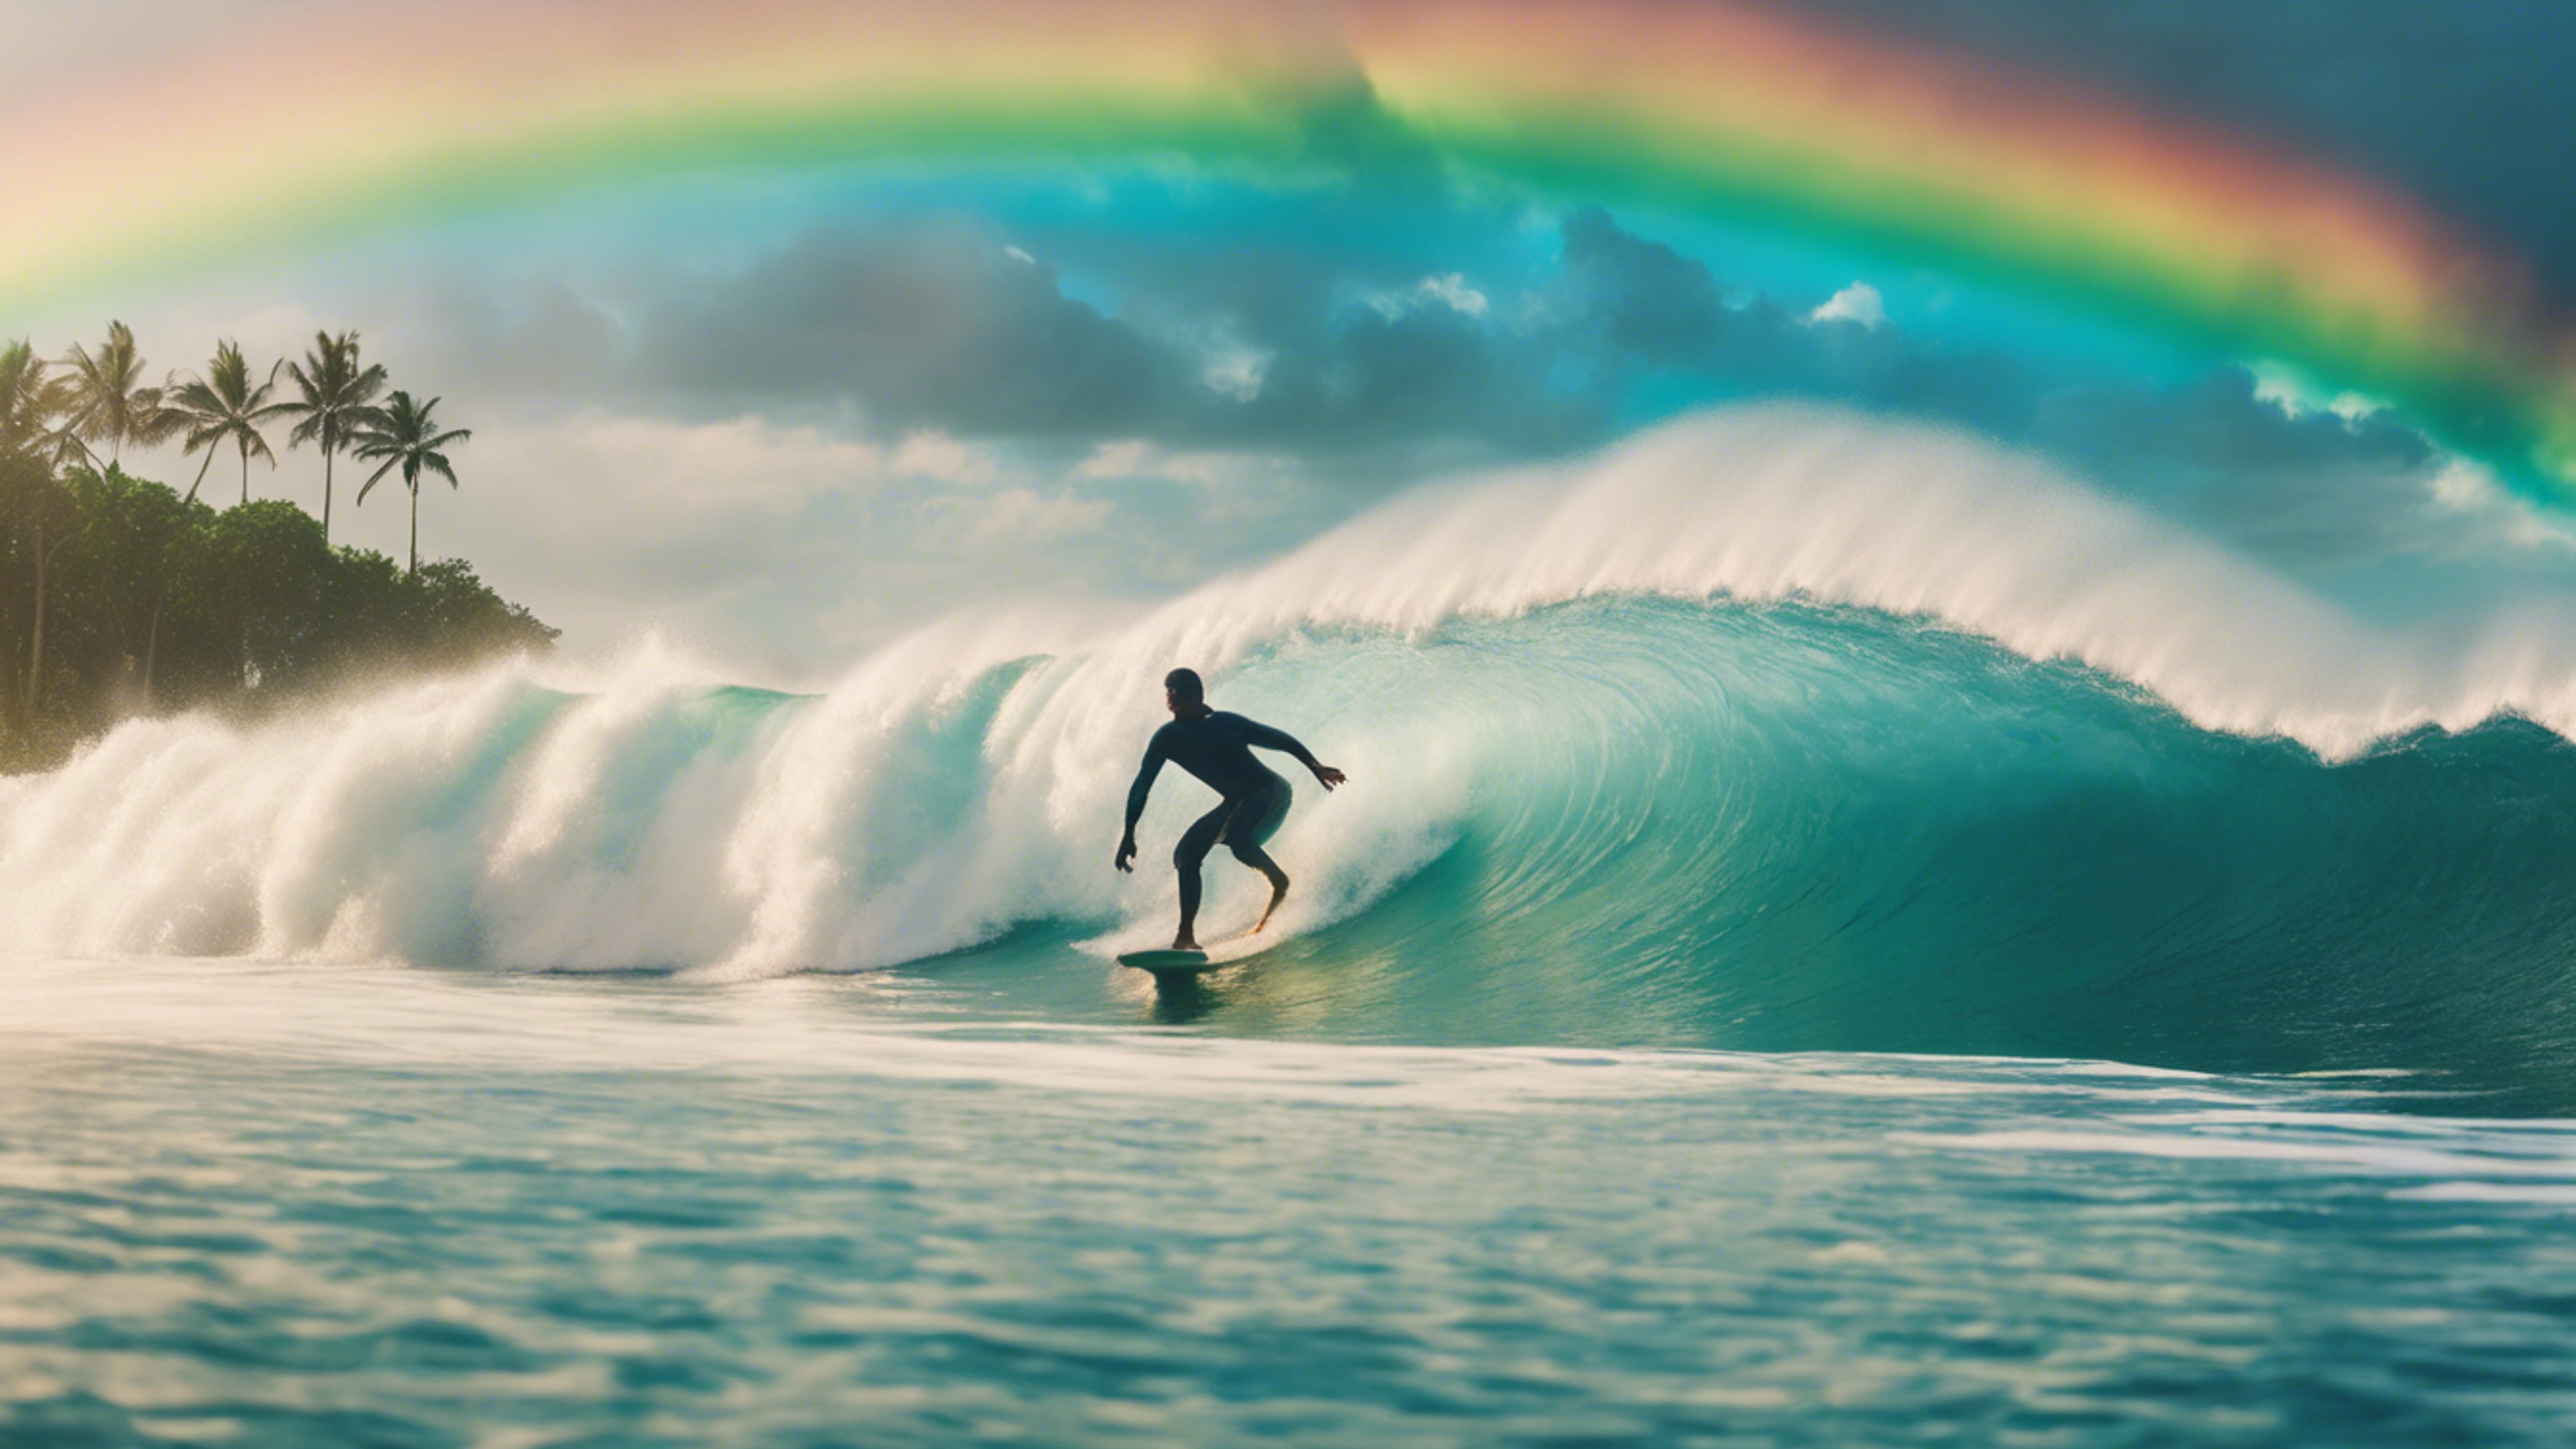 A spontaneous man surfing on a giant wave under a scintillating rainbow in a tropical ocean. 牆紙[41deec9b24da40d39c6d]